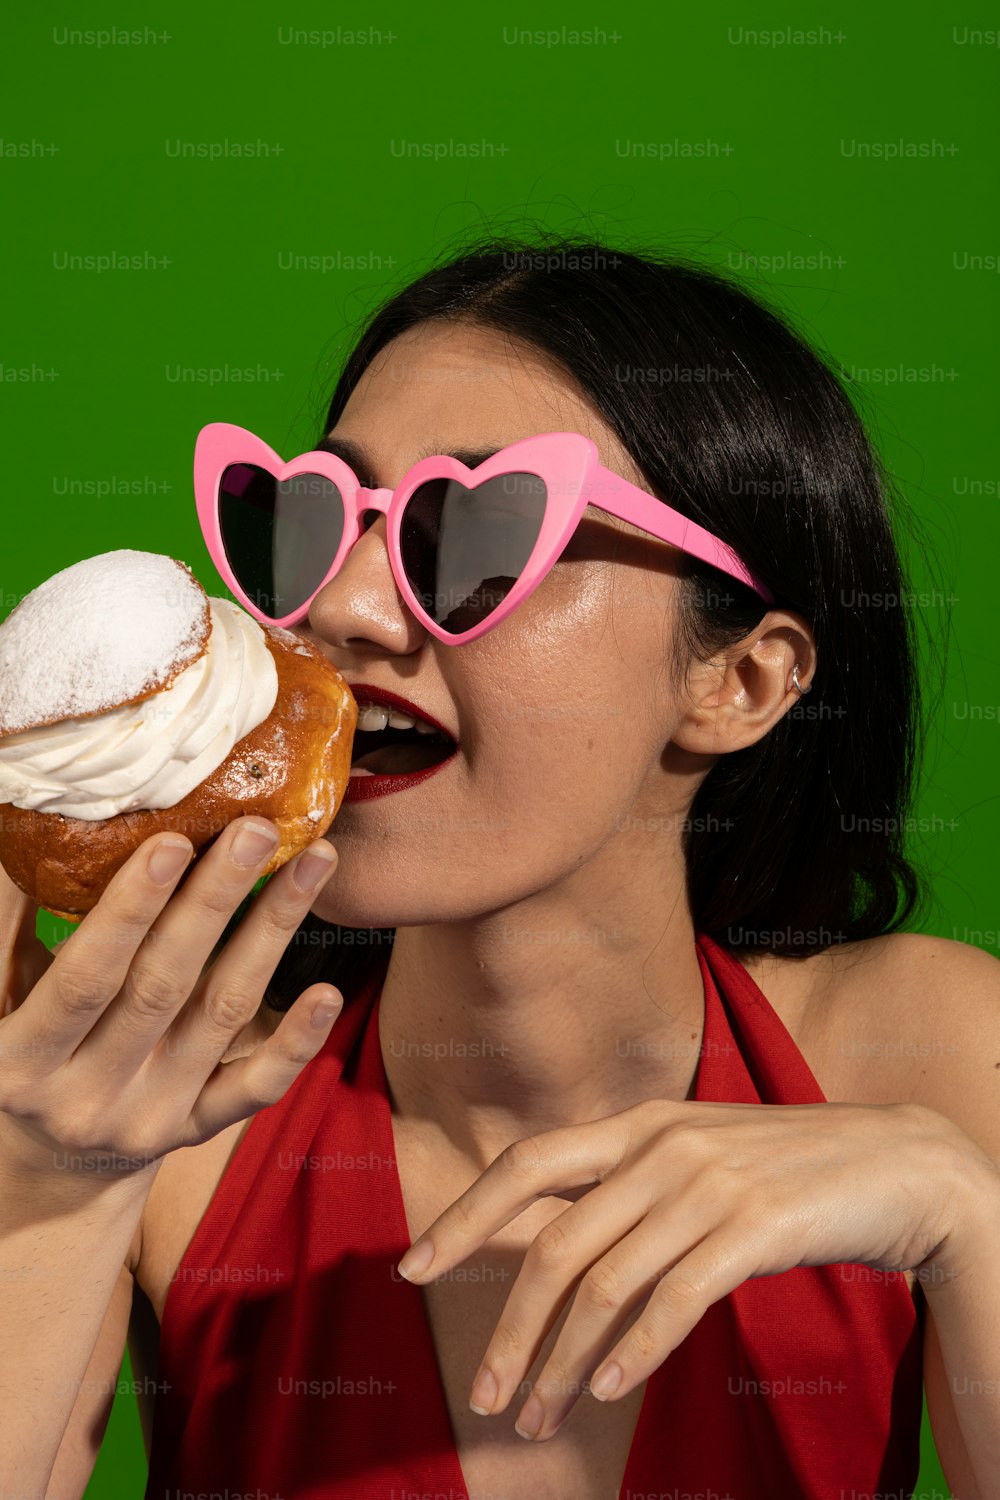 a woman wearing heart shaped sunglasses eating a doughnut